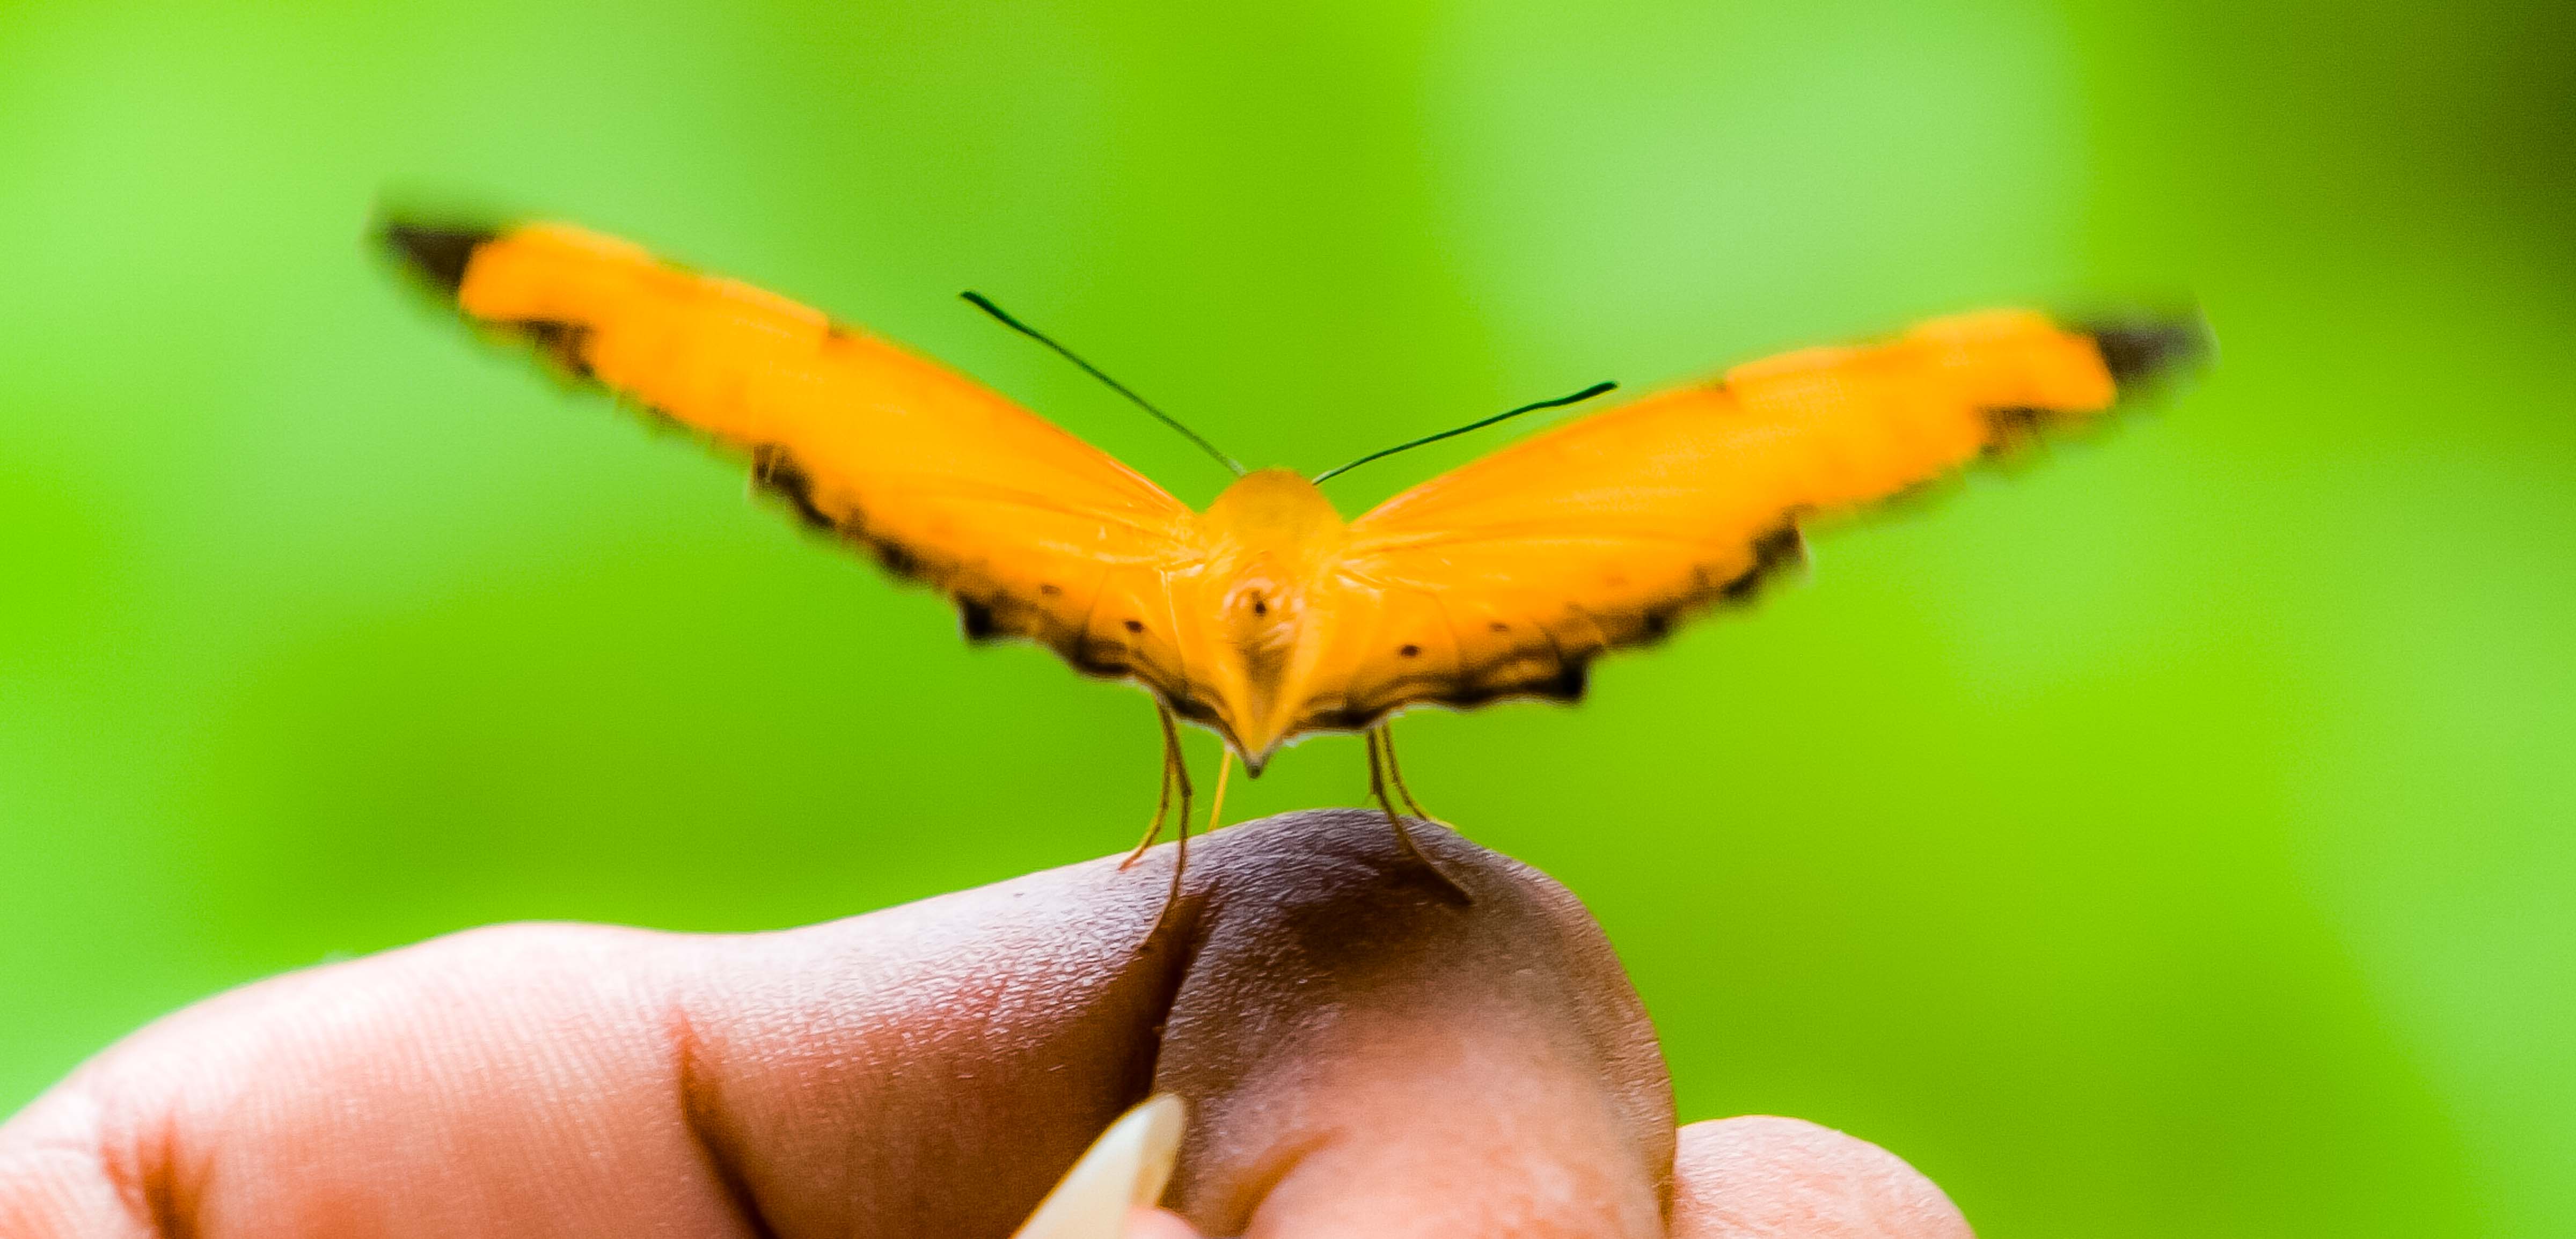 Seram, Orange Butterfly On Finger, 2006